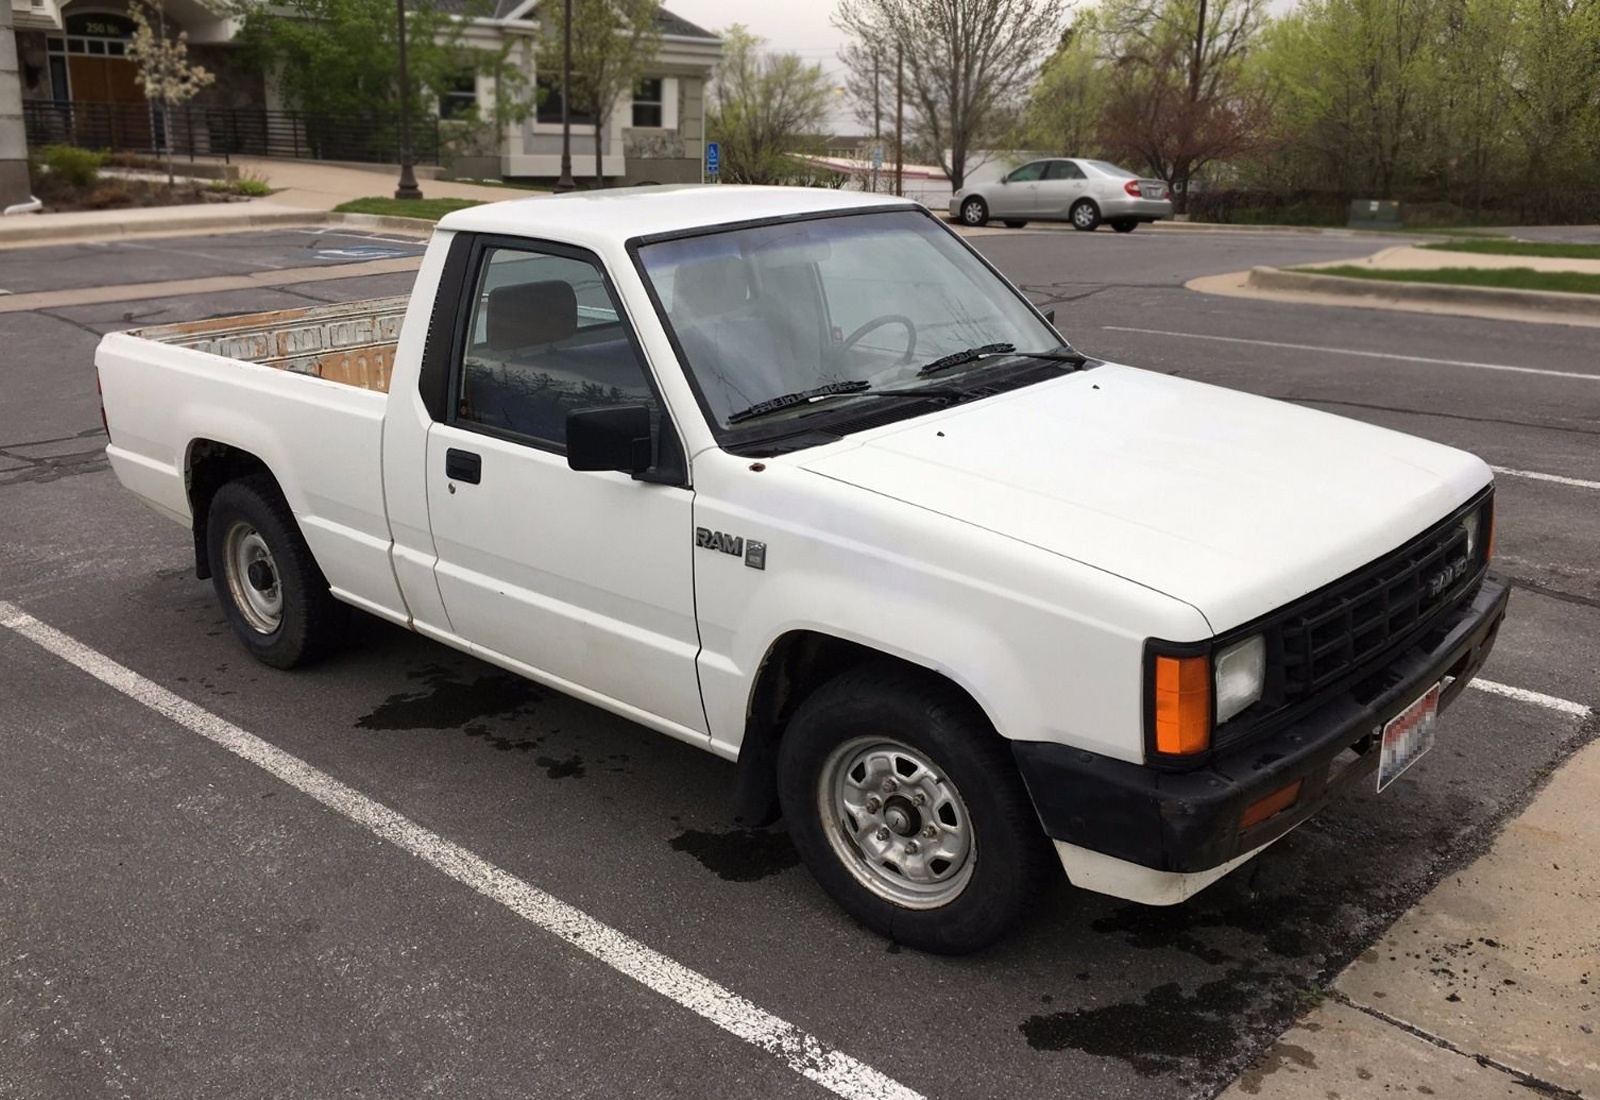 041017-Barn-Finds-1987-Dodge-Ram-50-pickup-3.jpg